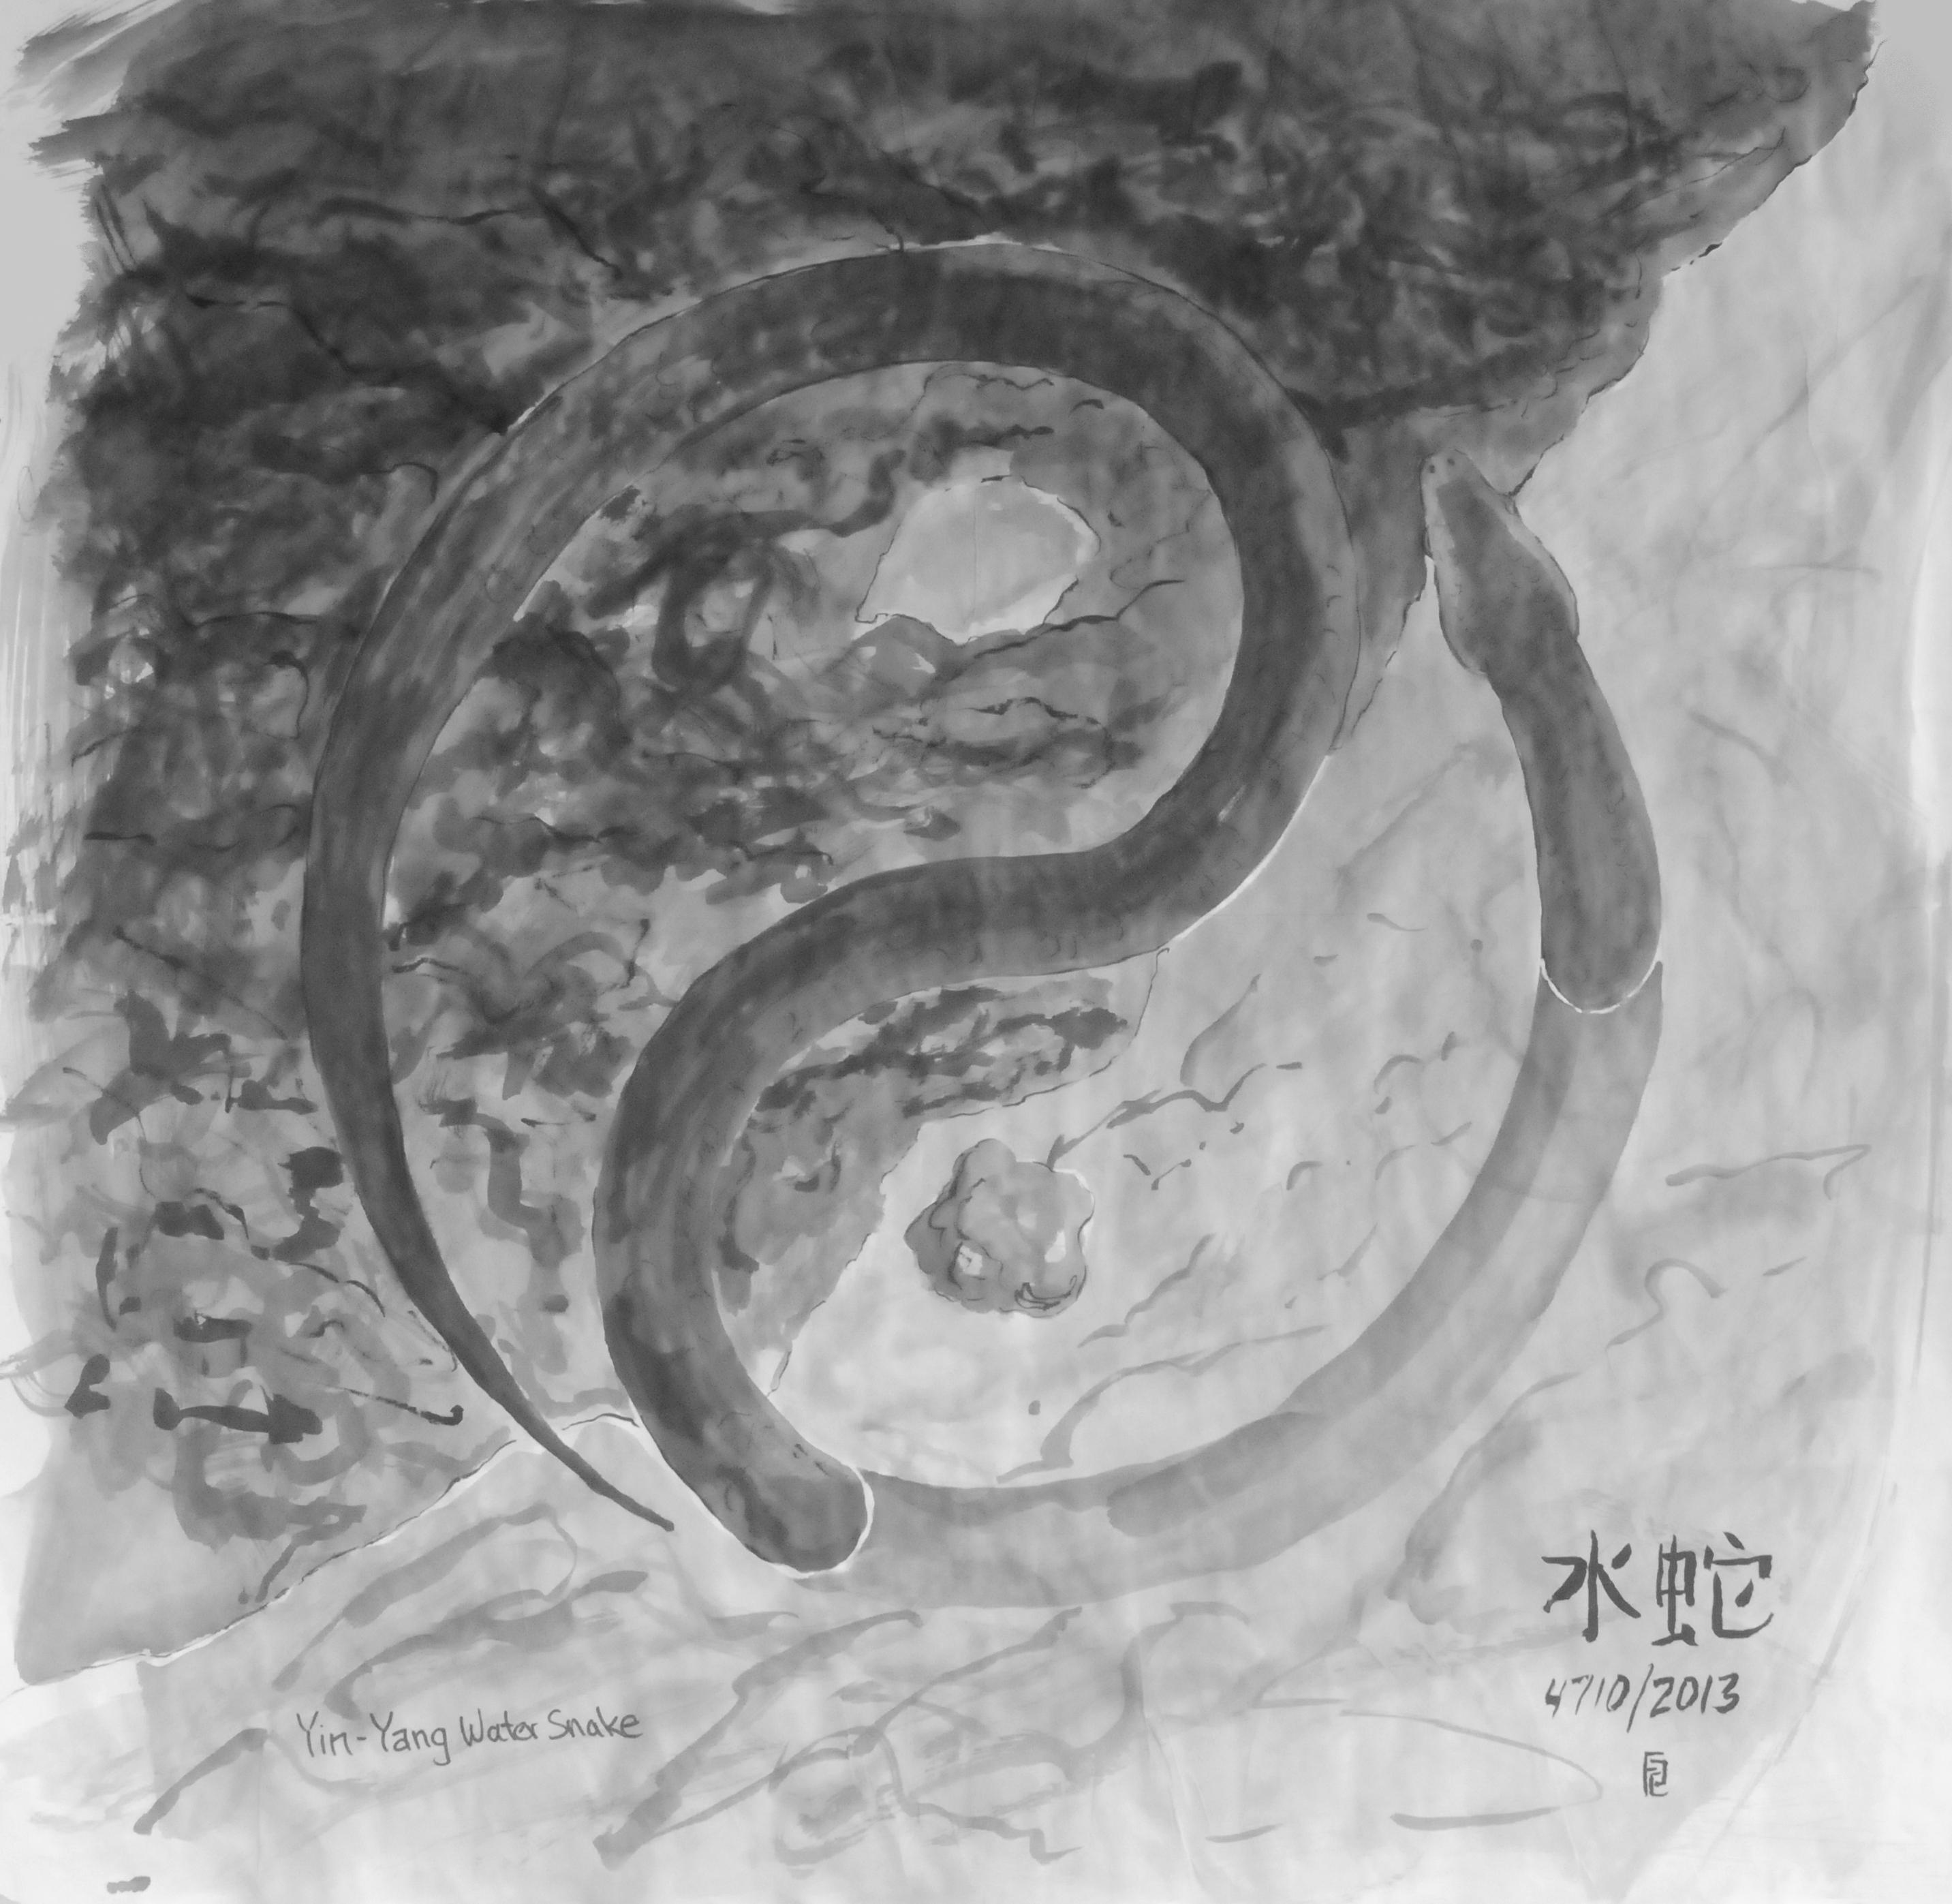 image of stylized yin yang symbol formed by a snake